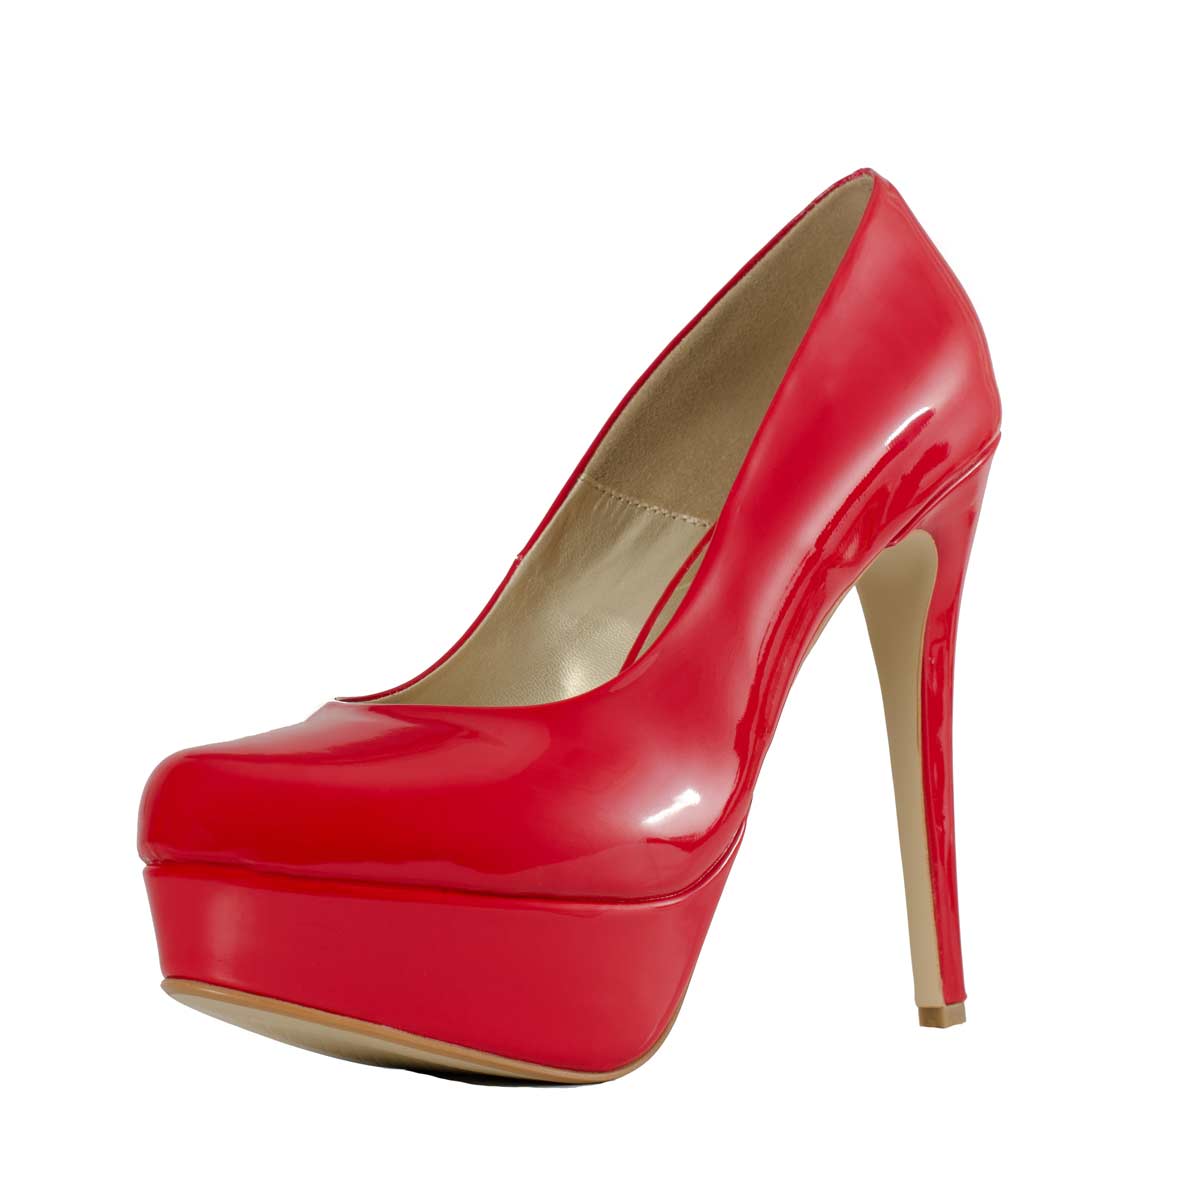 ViceVersa Bianca - Red Patent in Sexy Heels & Platforms - $69.99